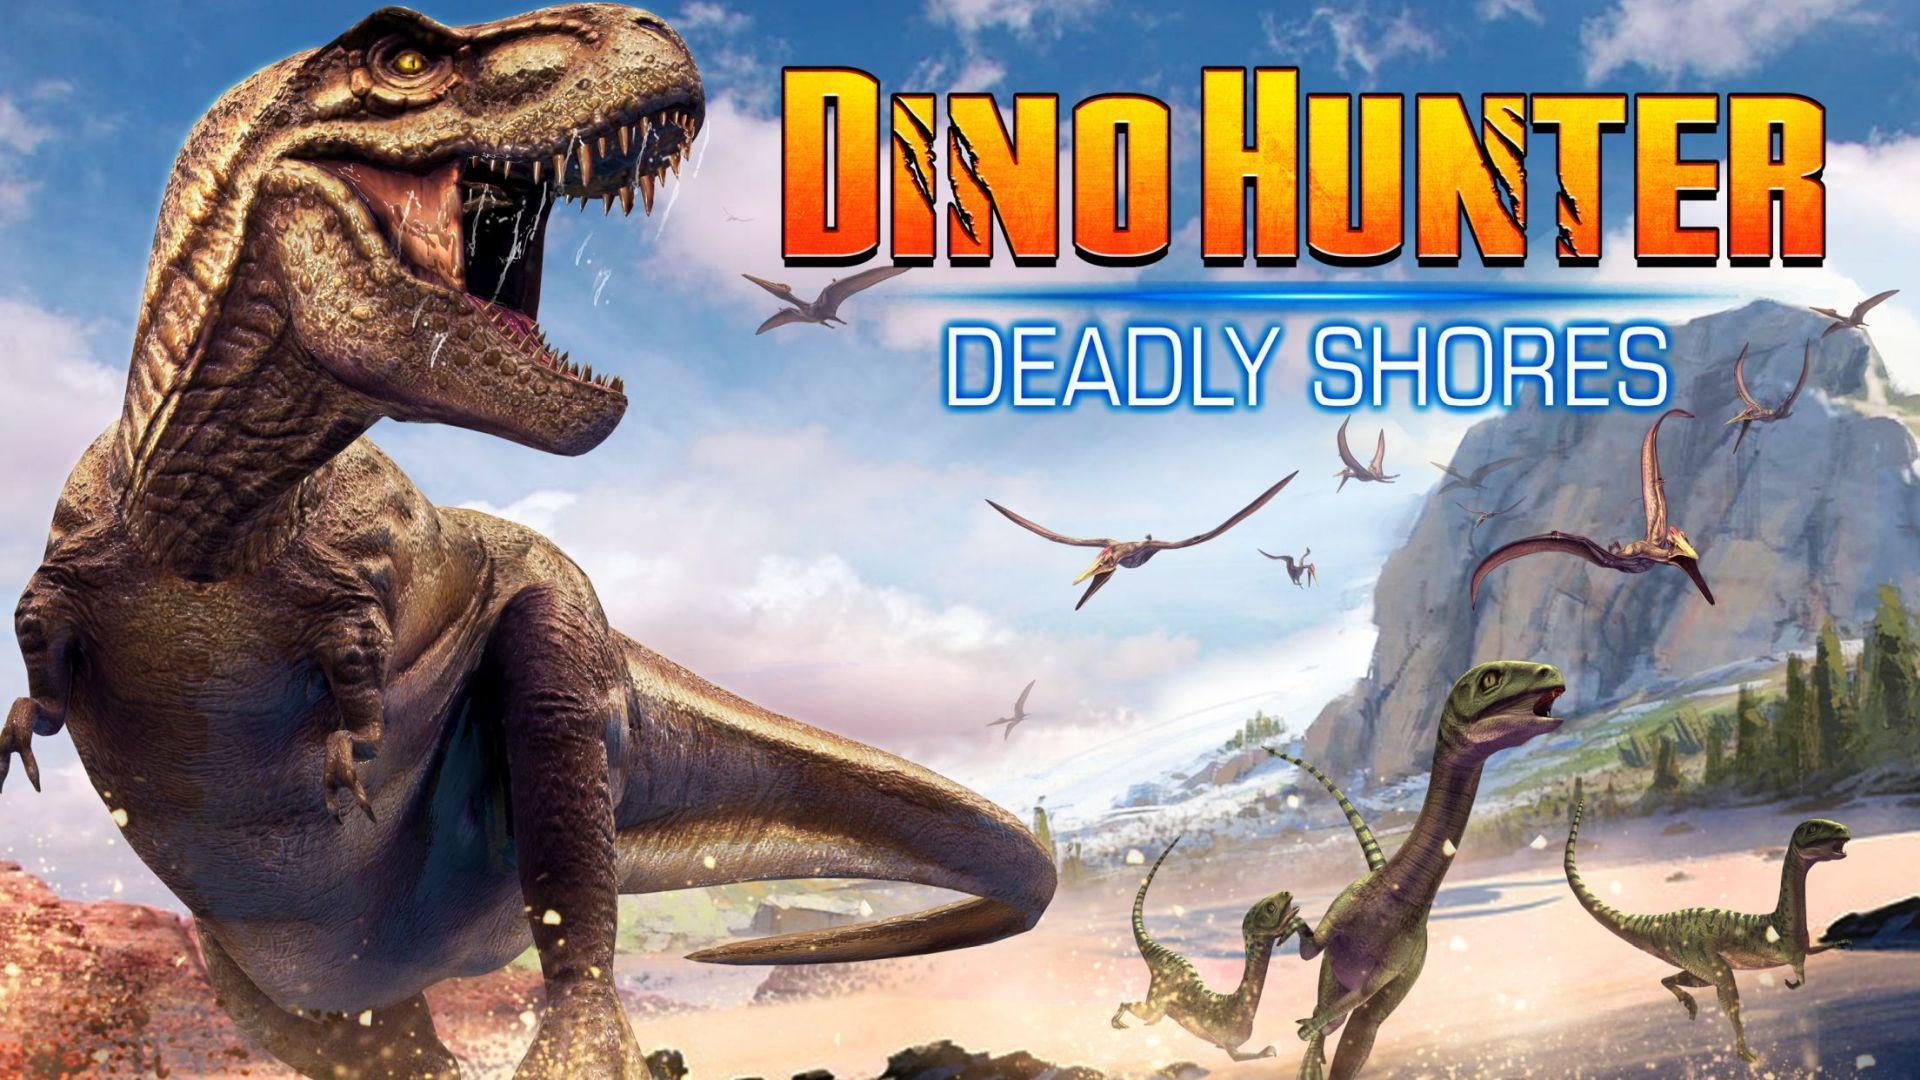 Dino hunter hacked apk free download